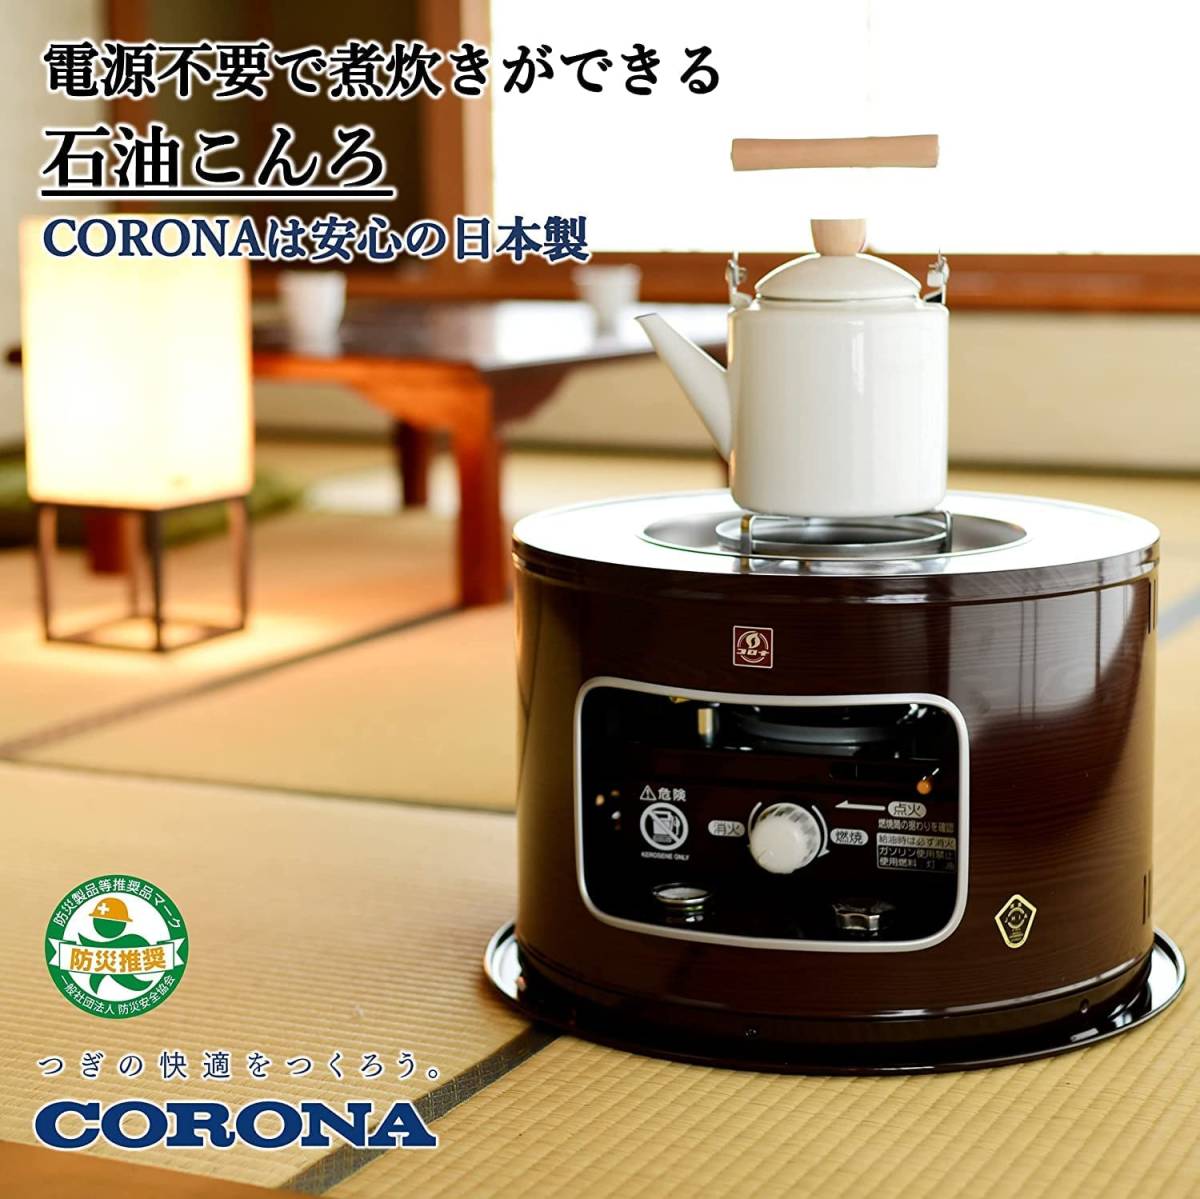 CORONA コロナ 石油こんろ 日本生産 煮炊き用 サロンヒーター 電源不要 